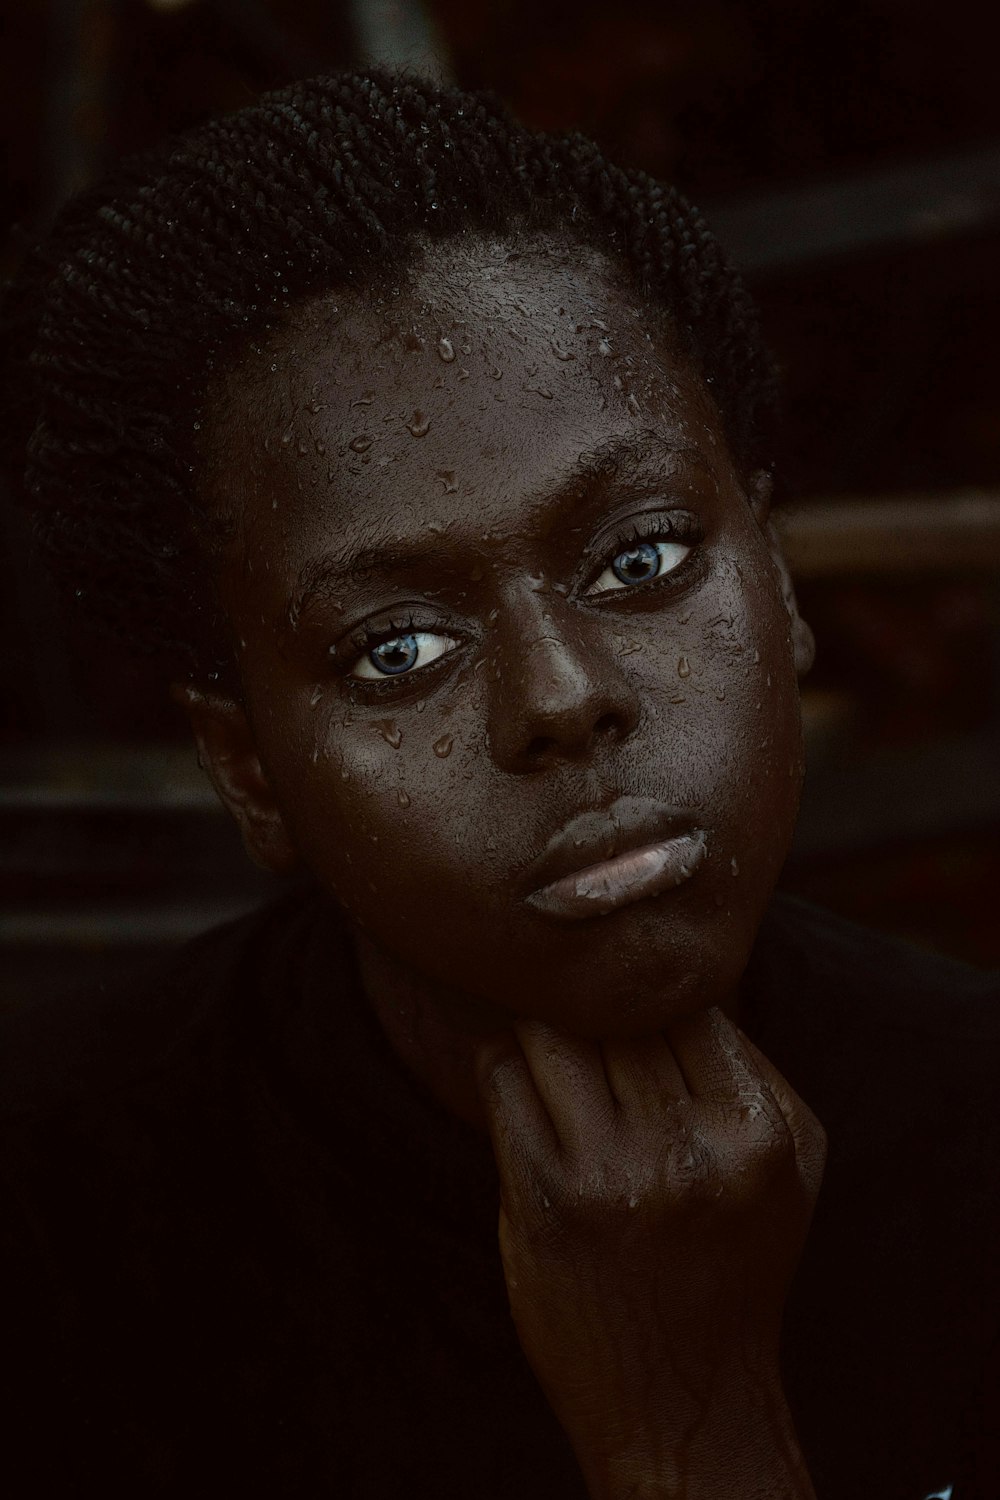  Black  Woman Portrait  Pictures Download Free Images on 